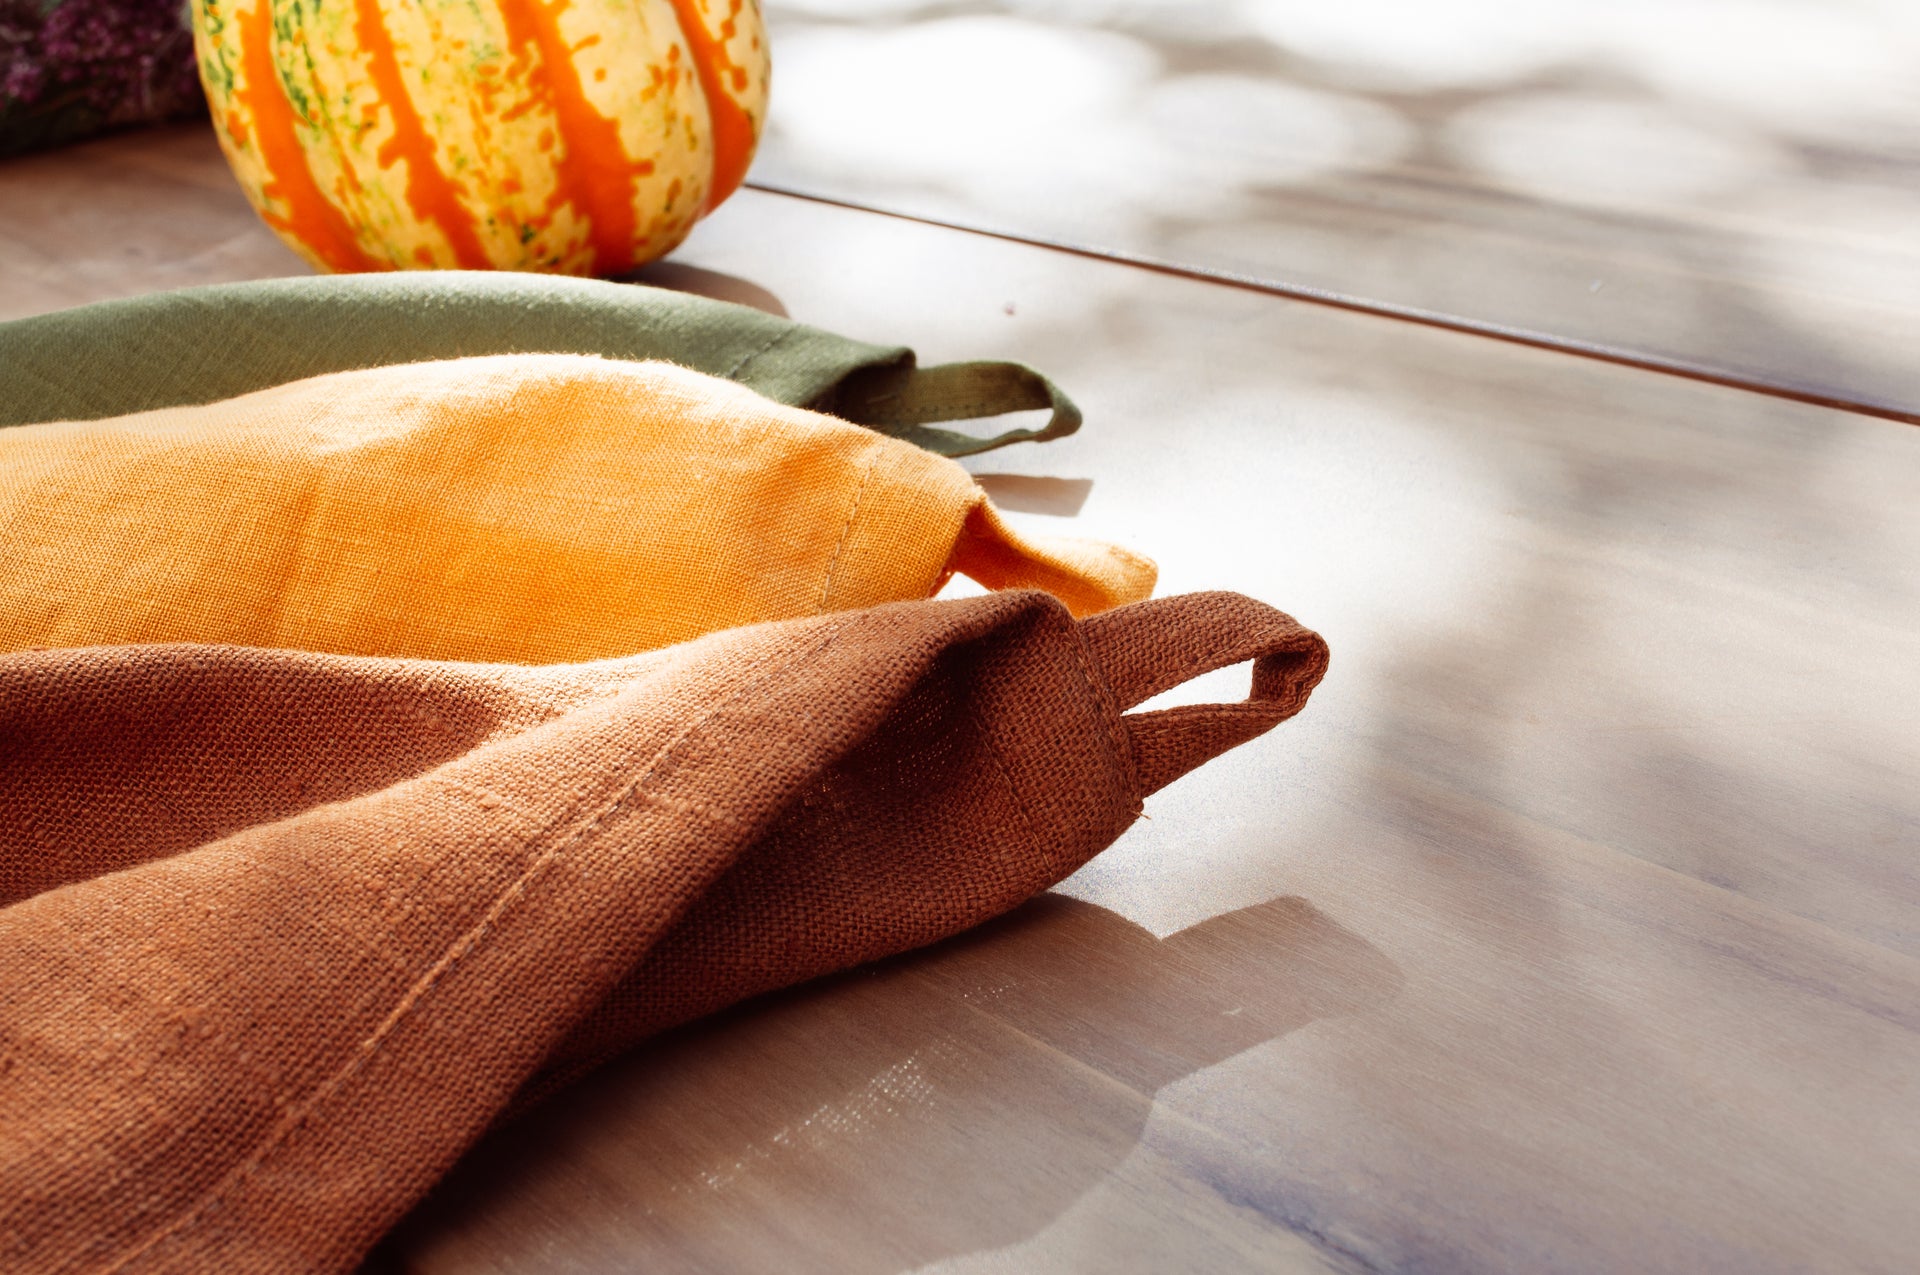 Funky Foliage Fall Kitchen Tea Towel - Linen/Cotton